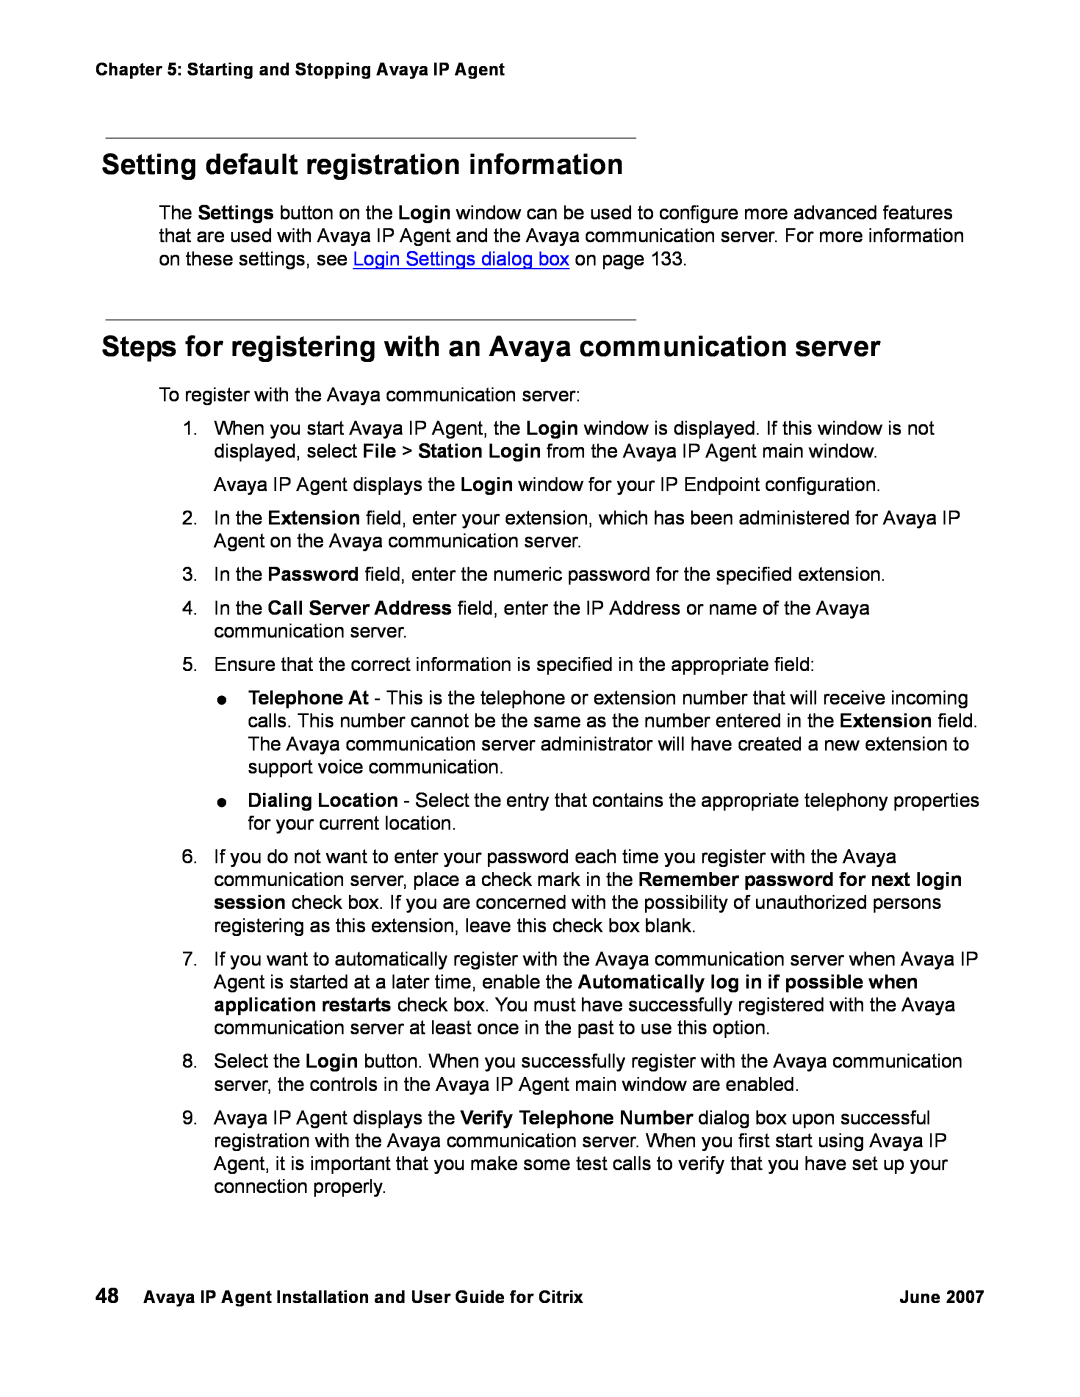 Avaya 7 manual Setting default registration information, Steps for registering with an Avaya communication server 